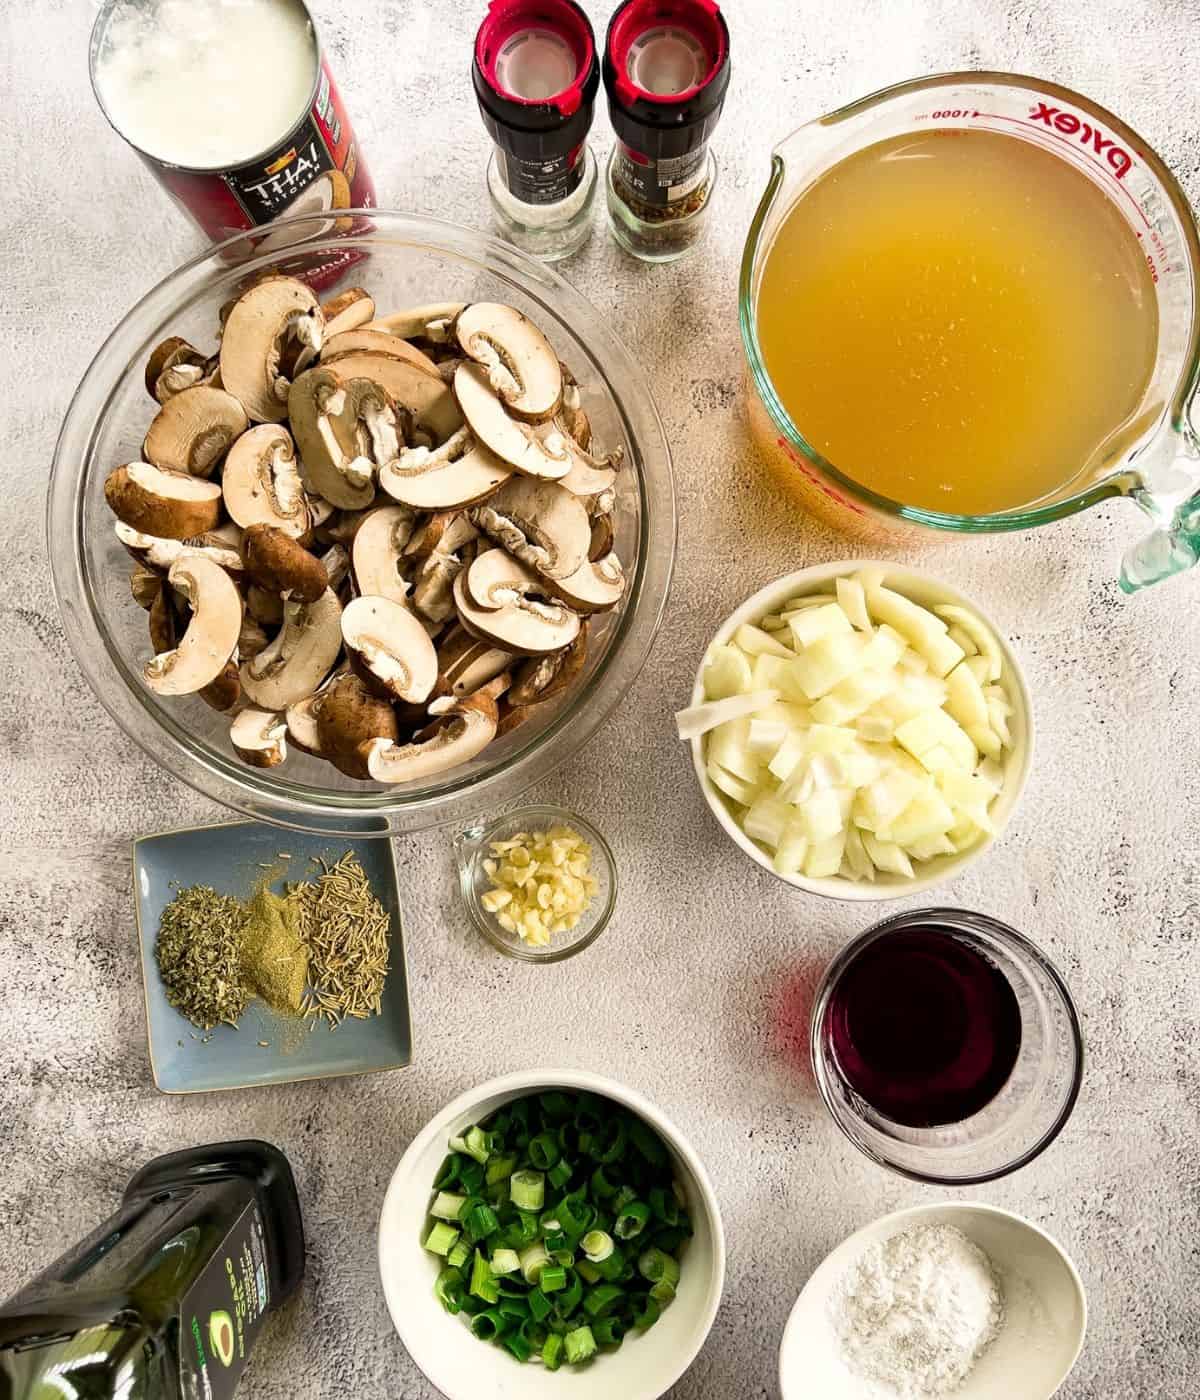 Ingredients for vegan mushroom soup recipe.